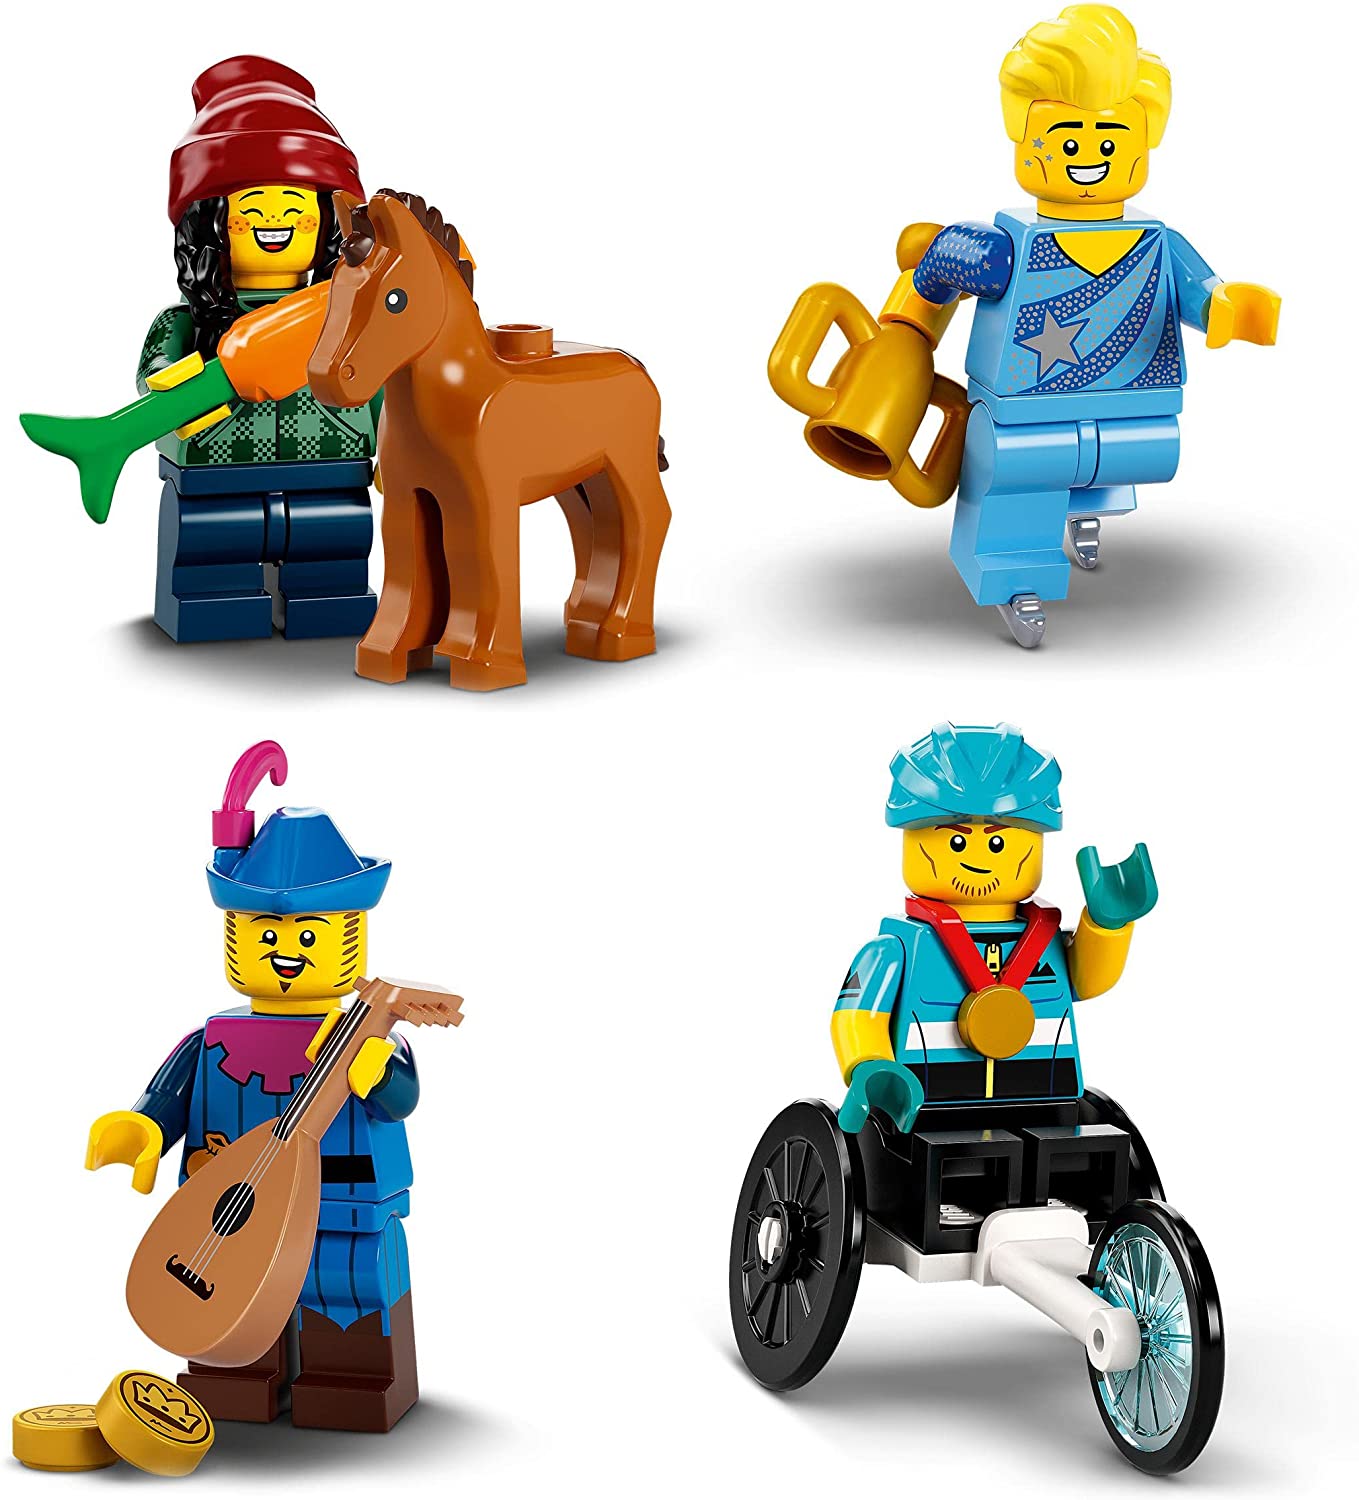 LEGO 71032 Minifigures Minifiguren Serie 22, 1 von 12 Sammelfiguren